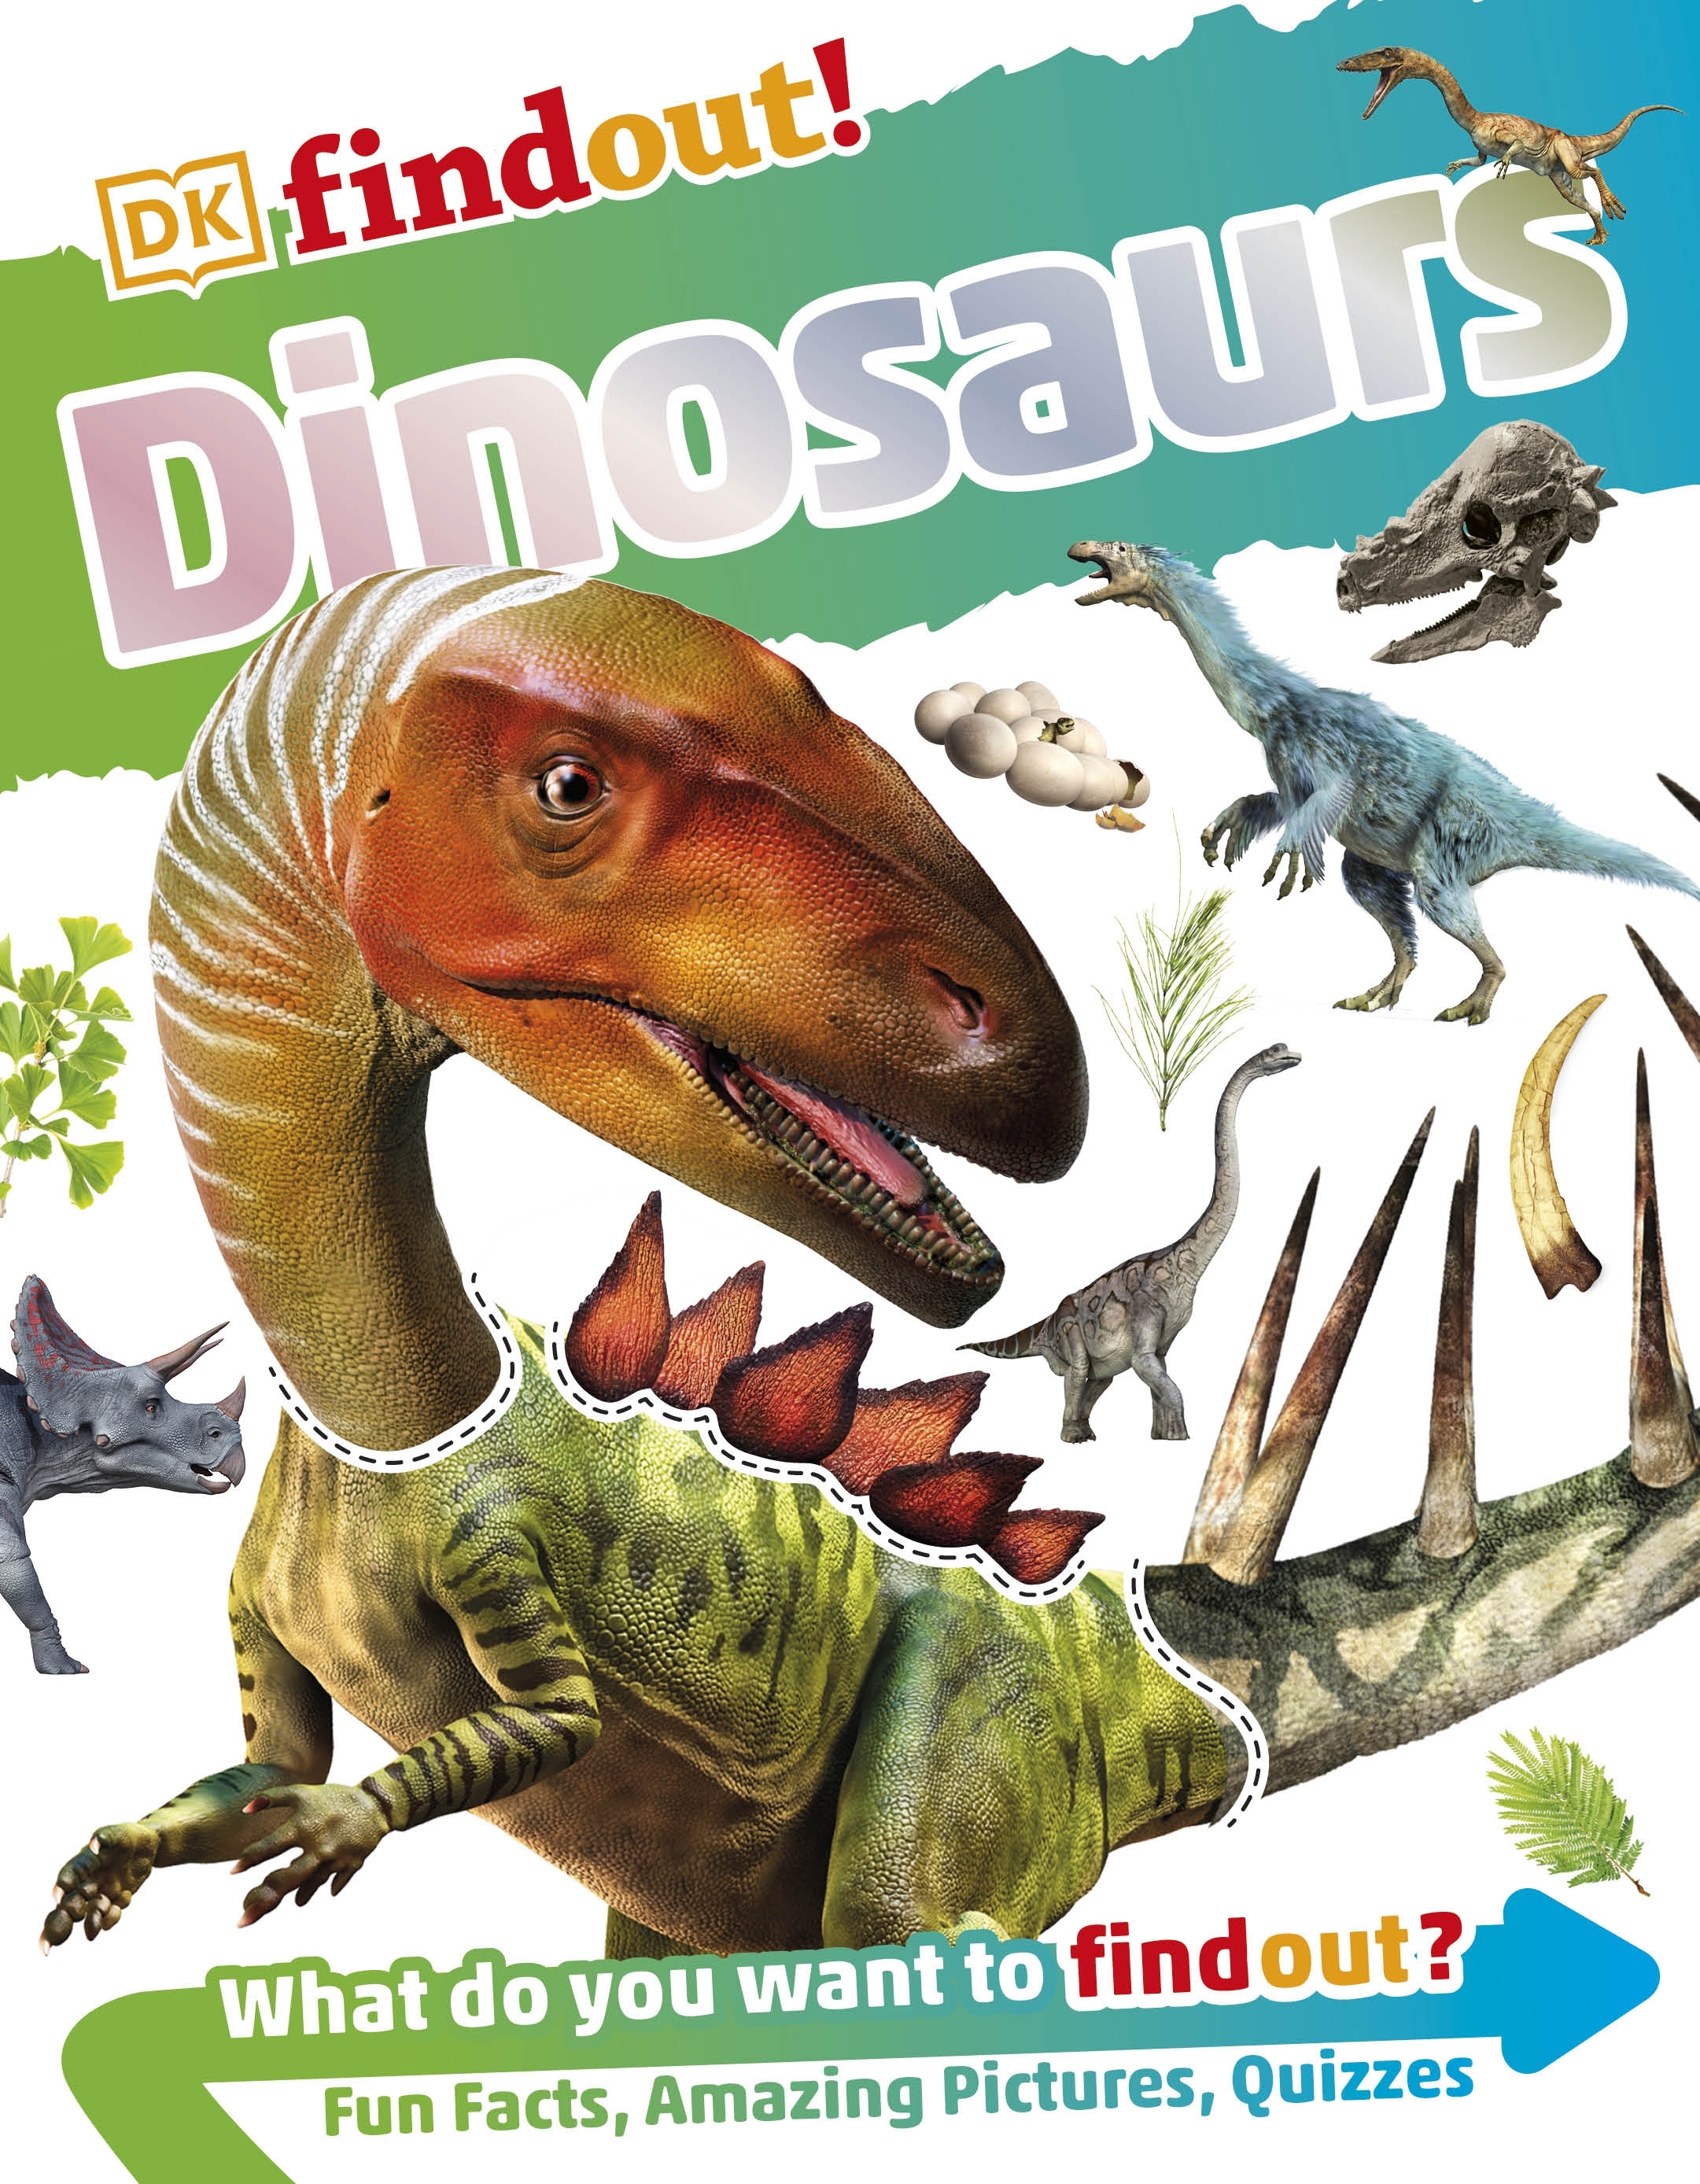 Dkfindout Dinosaurs By Dk Penguin Books Australia 